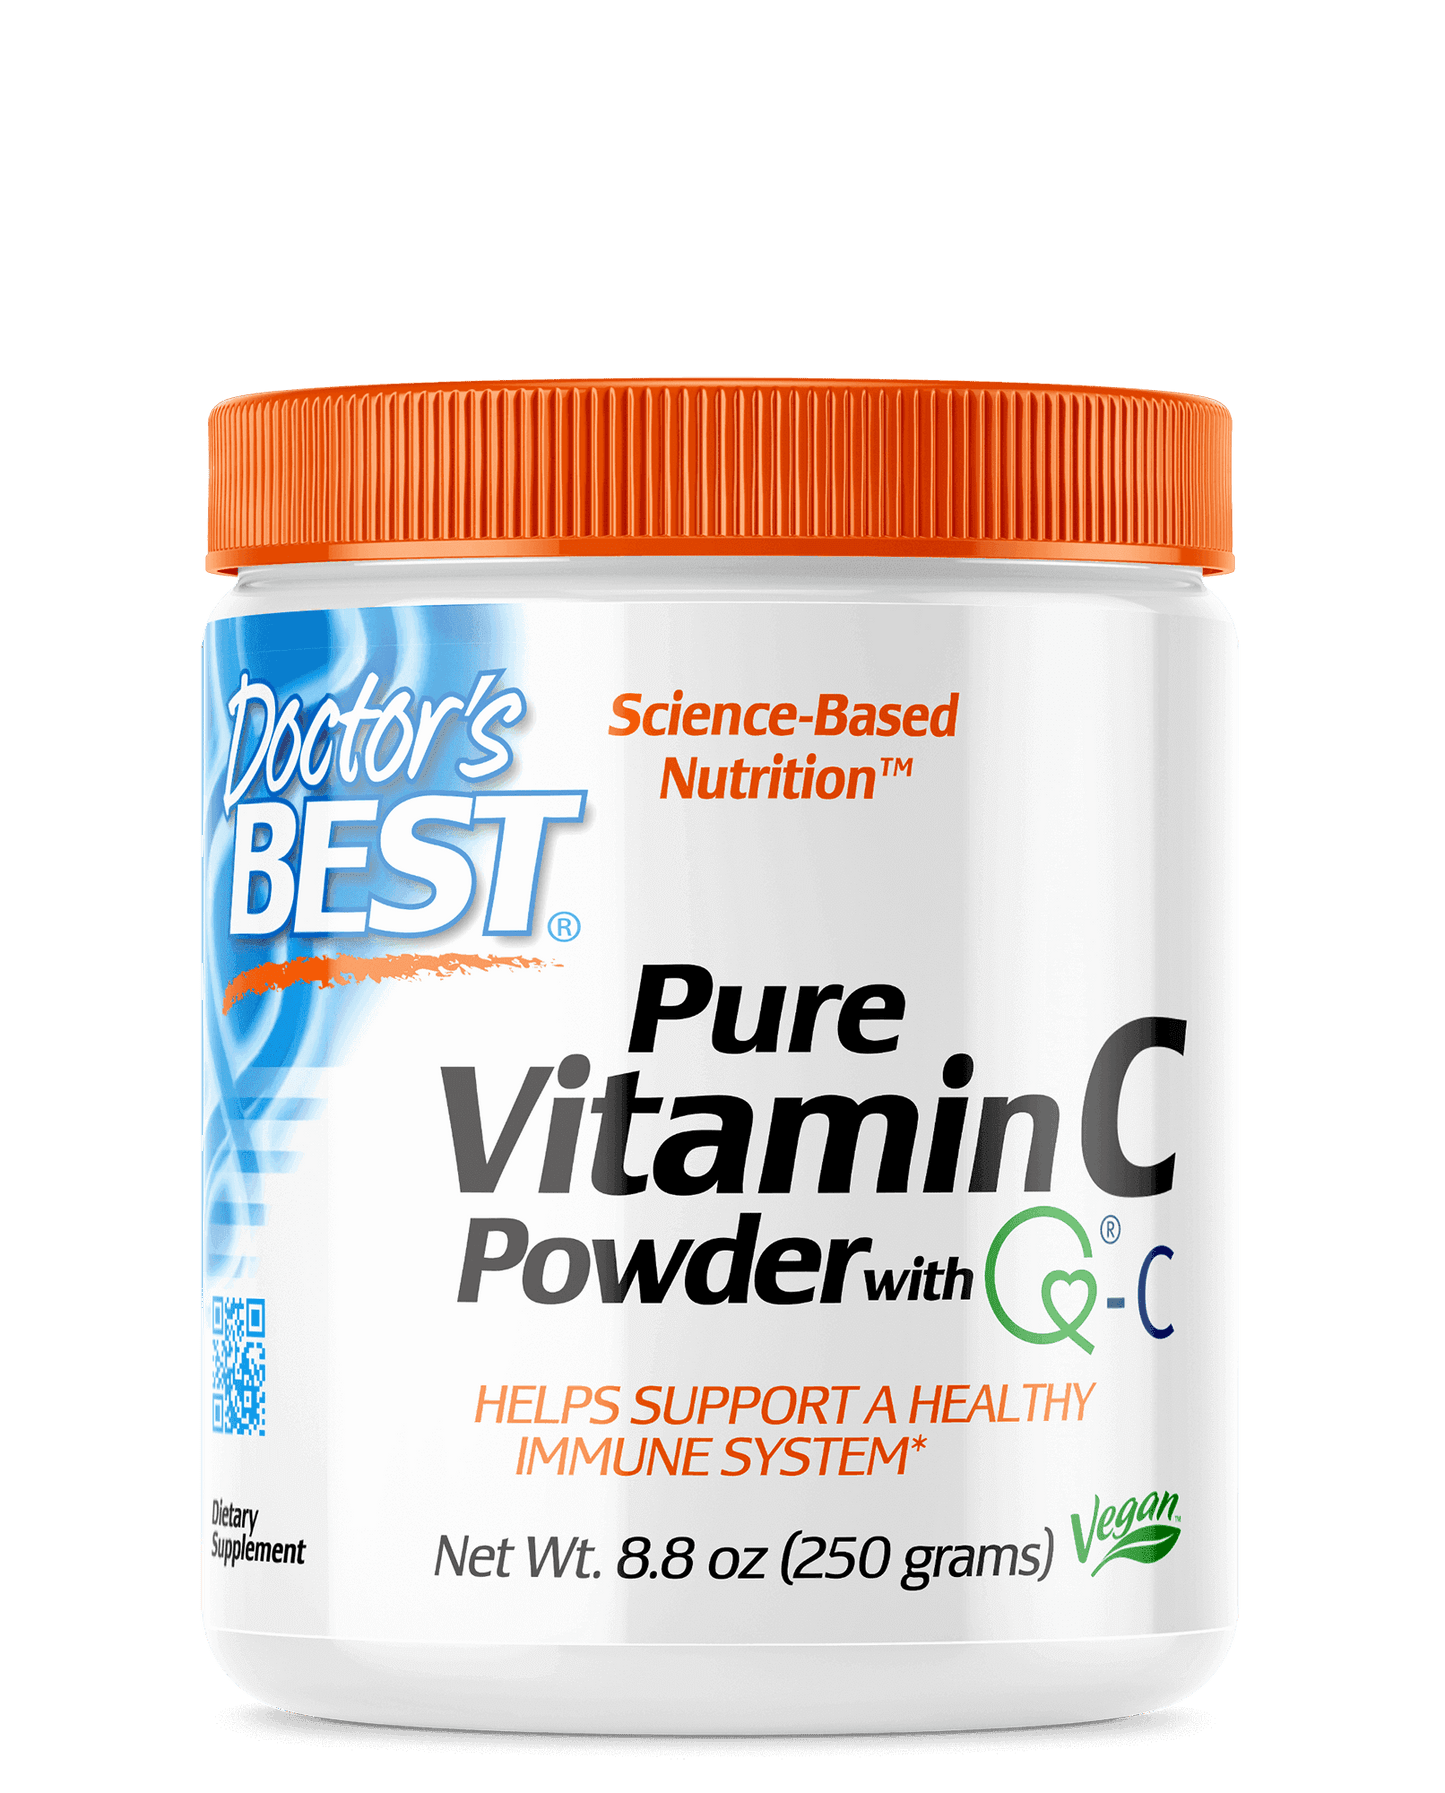 Doctor's Best Vitamin C with Q-C 250gm Powder